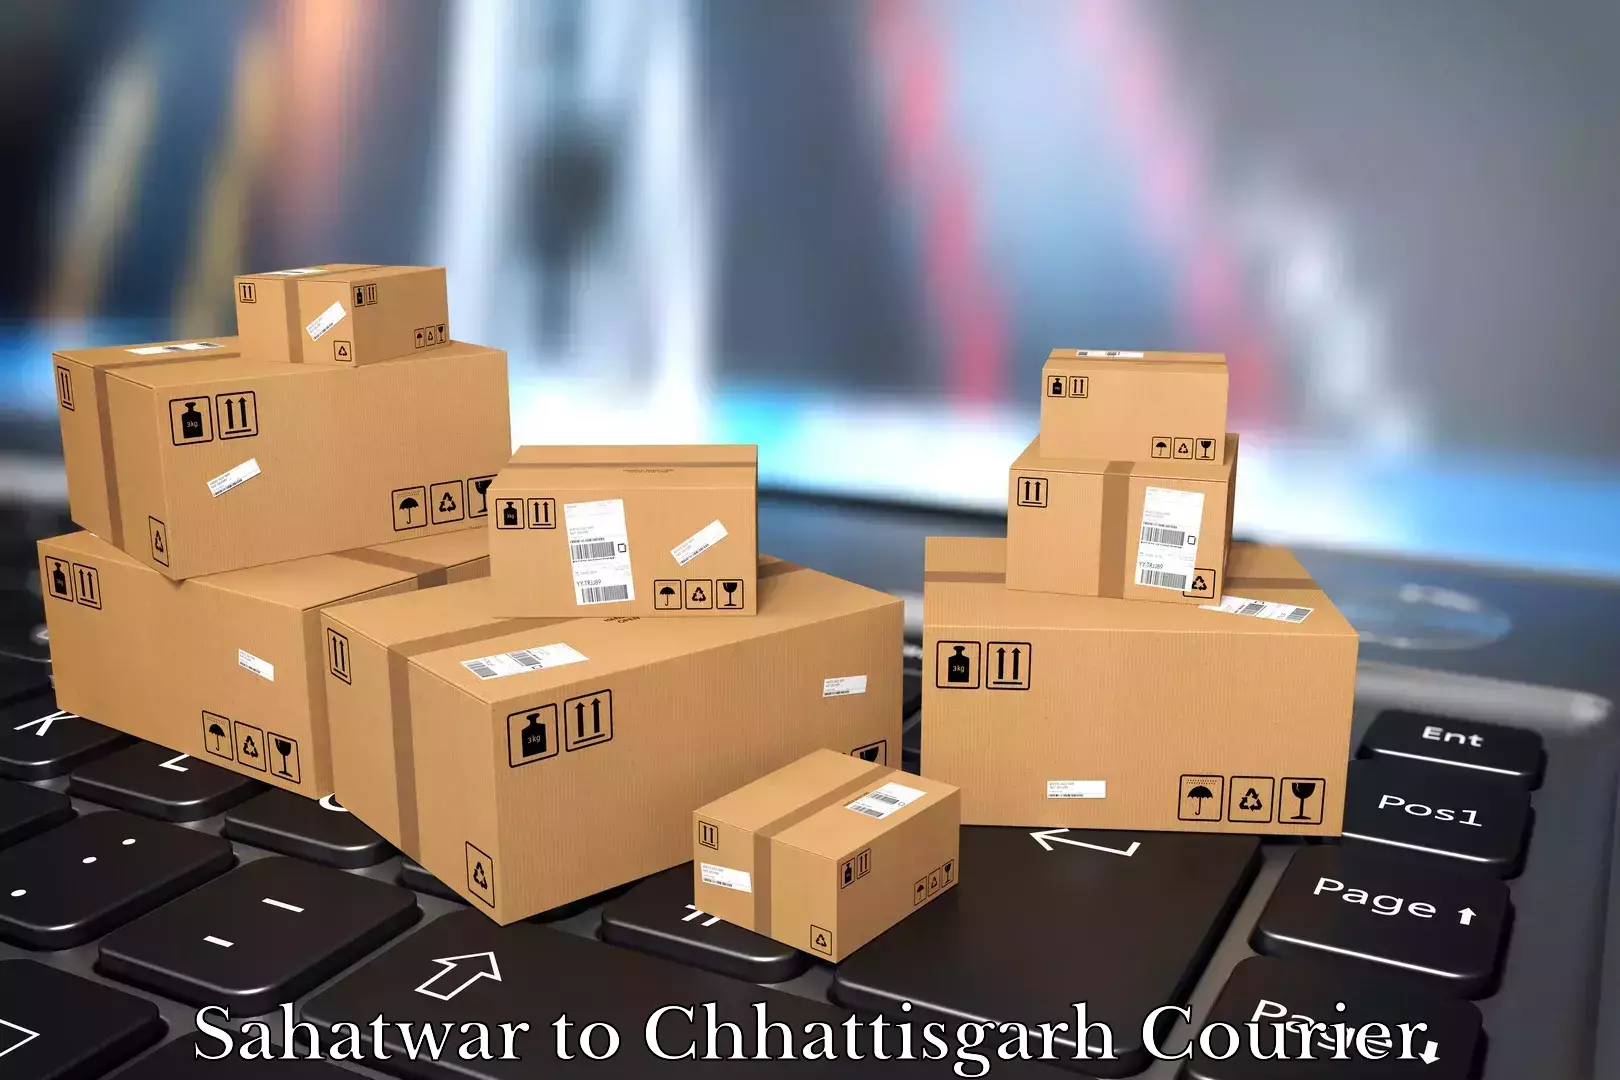 Trusted moving company Sahatwar to Korea Chhattisgarh